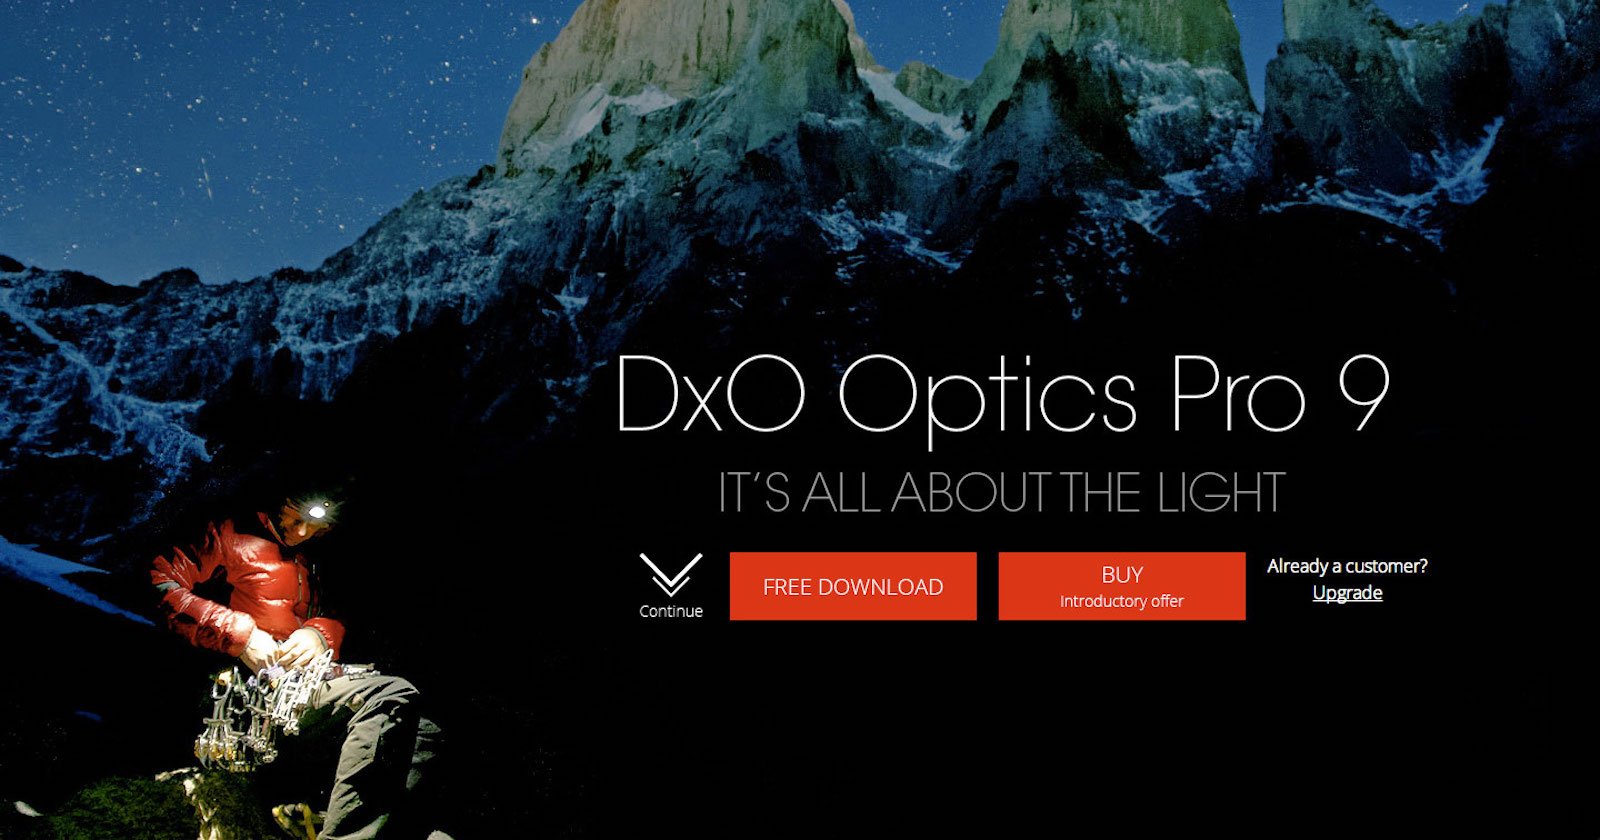 dxo optics pro 9 free download